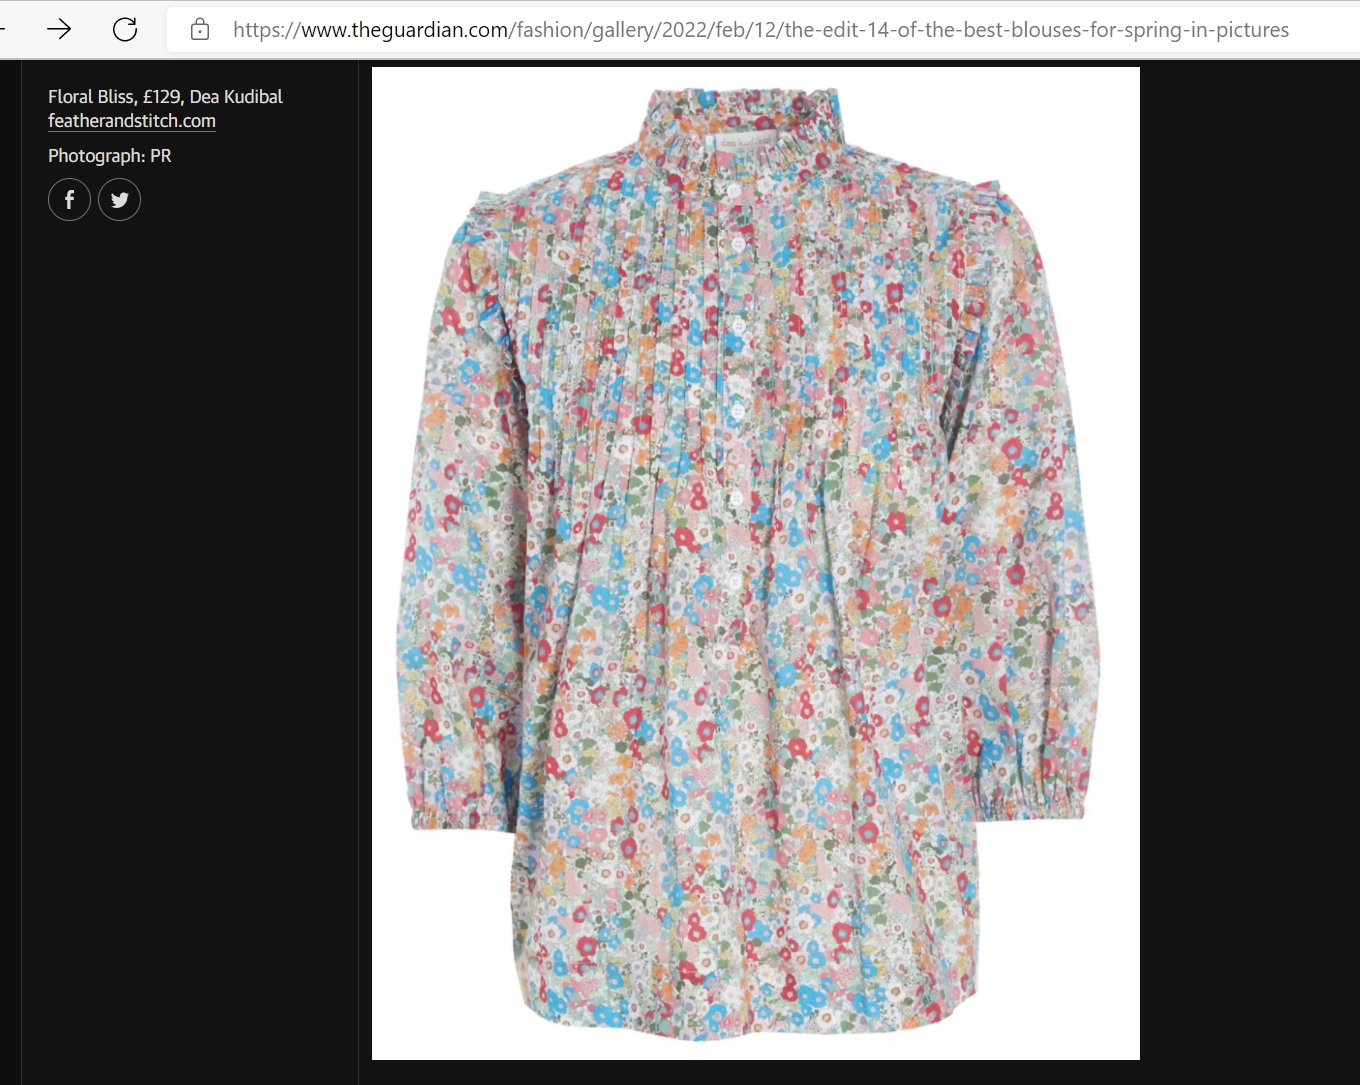 Dea Kudibal blouse in The Guardian online